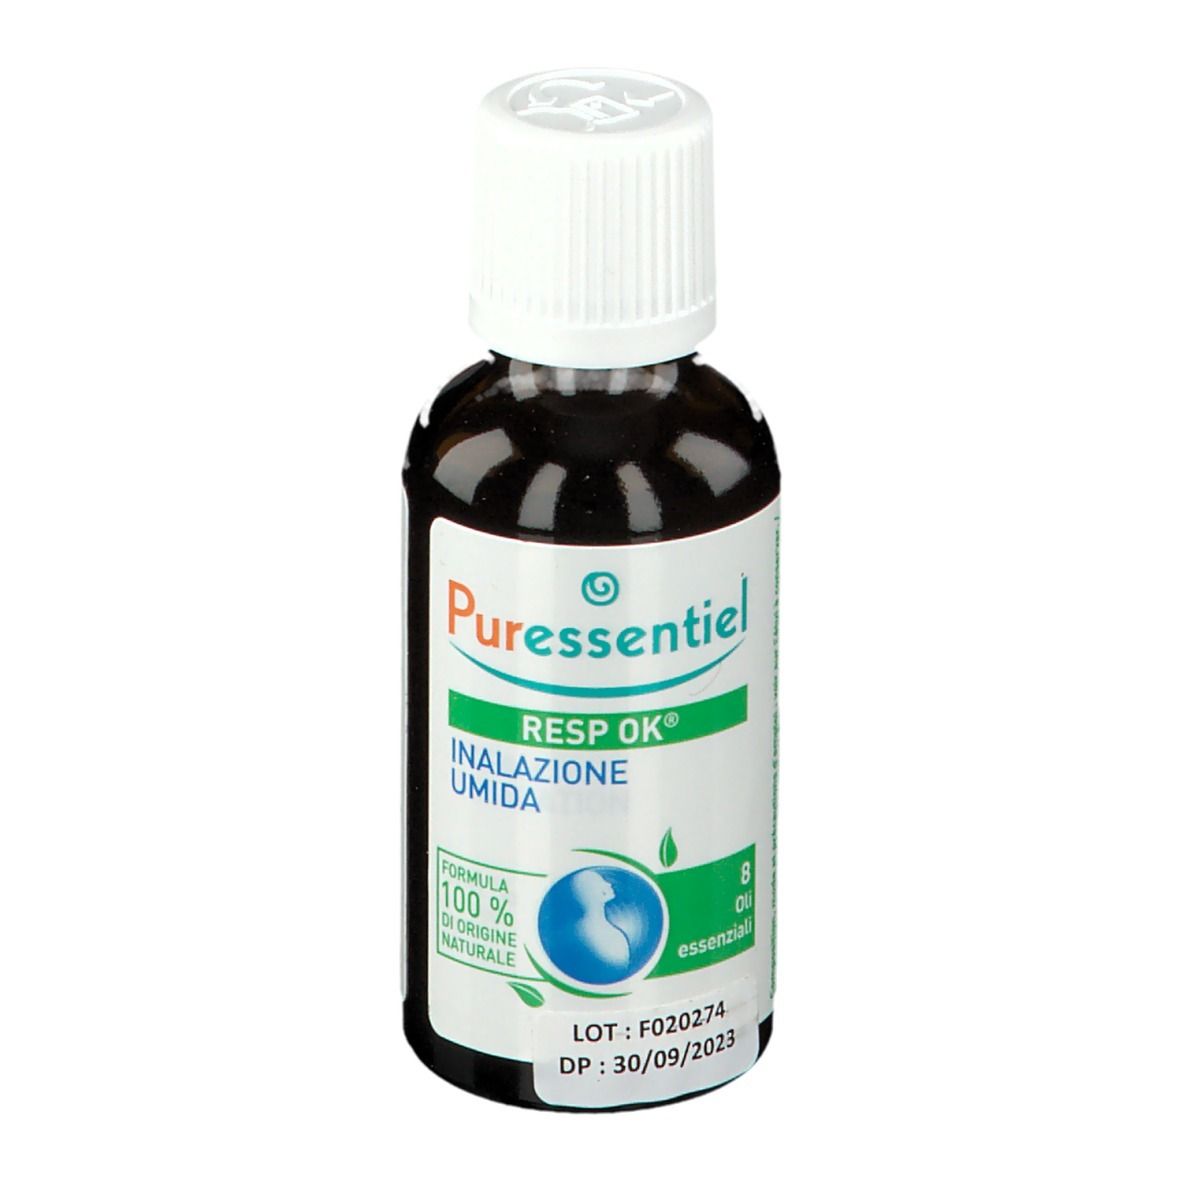 Image of Puressentiel RESP OK® Inhalation